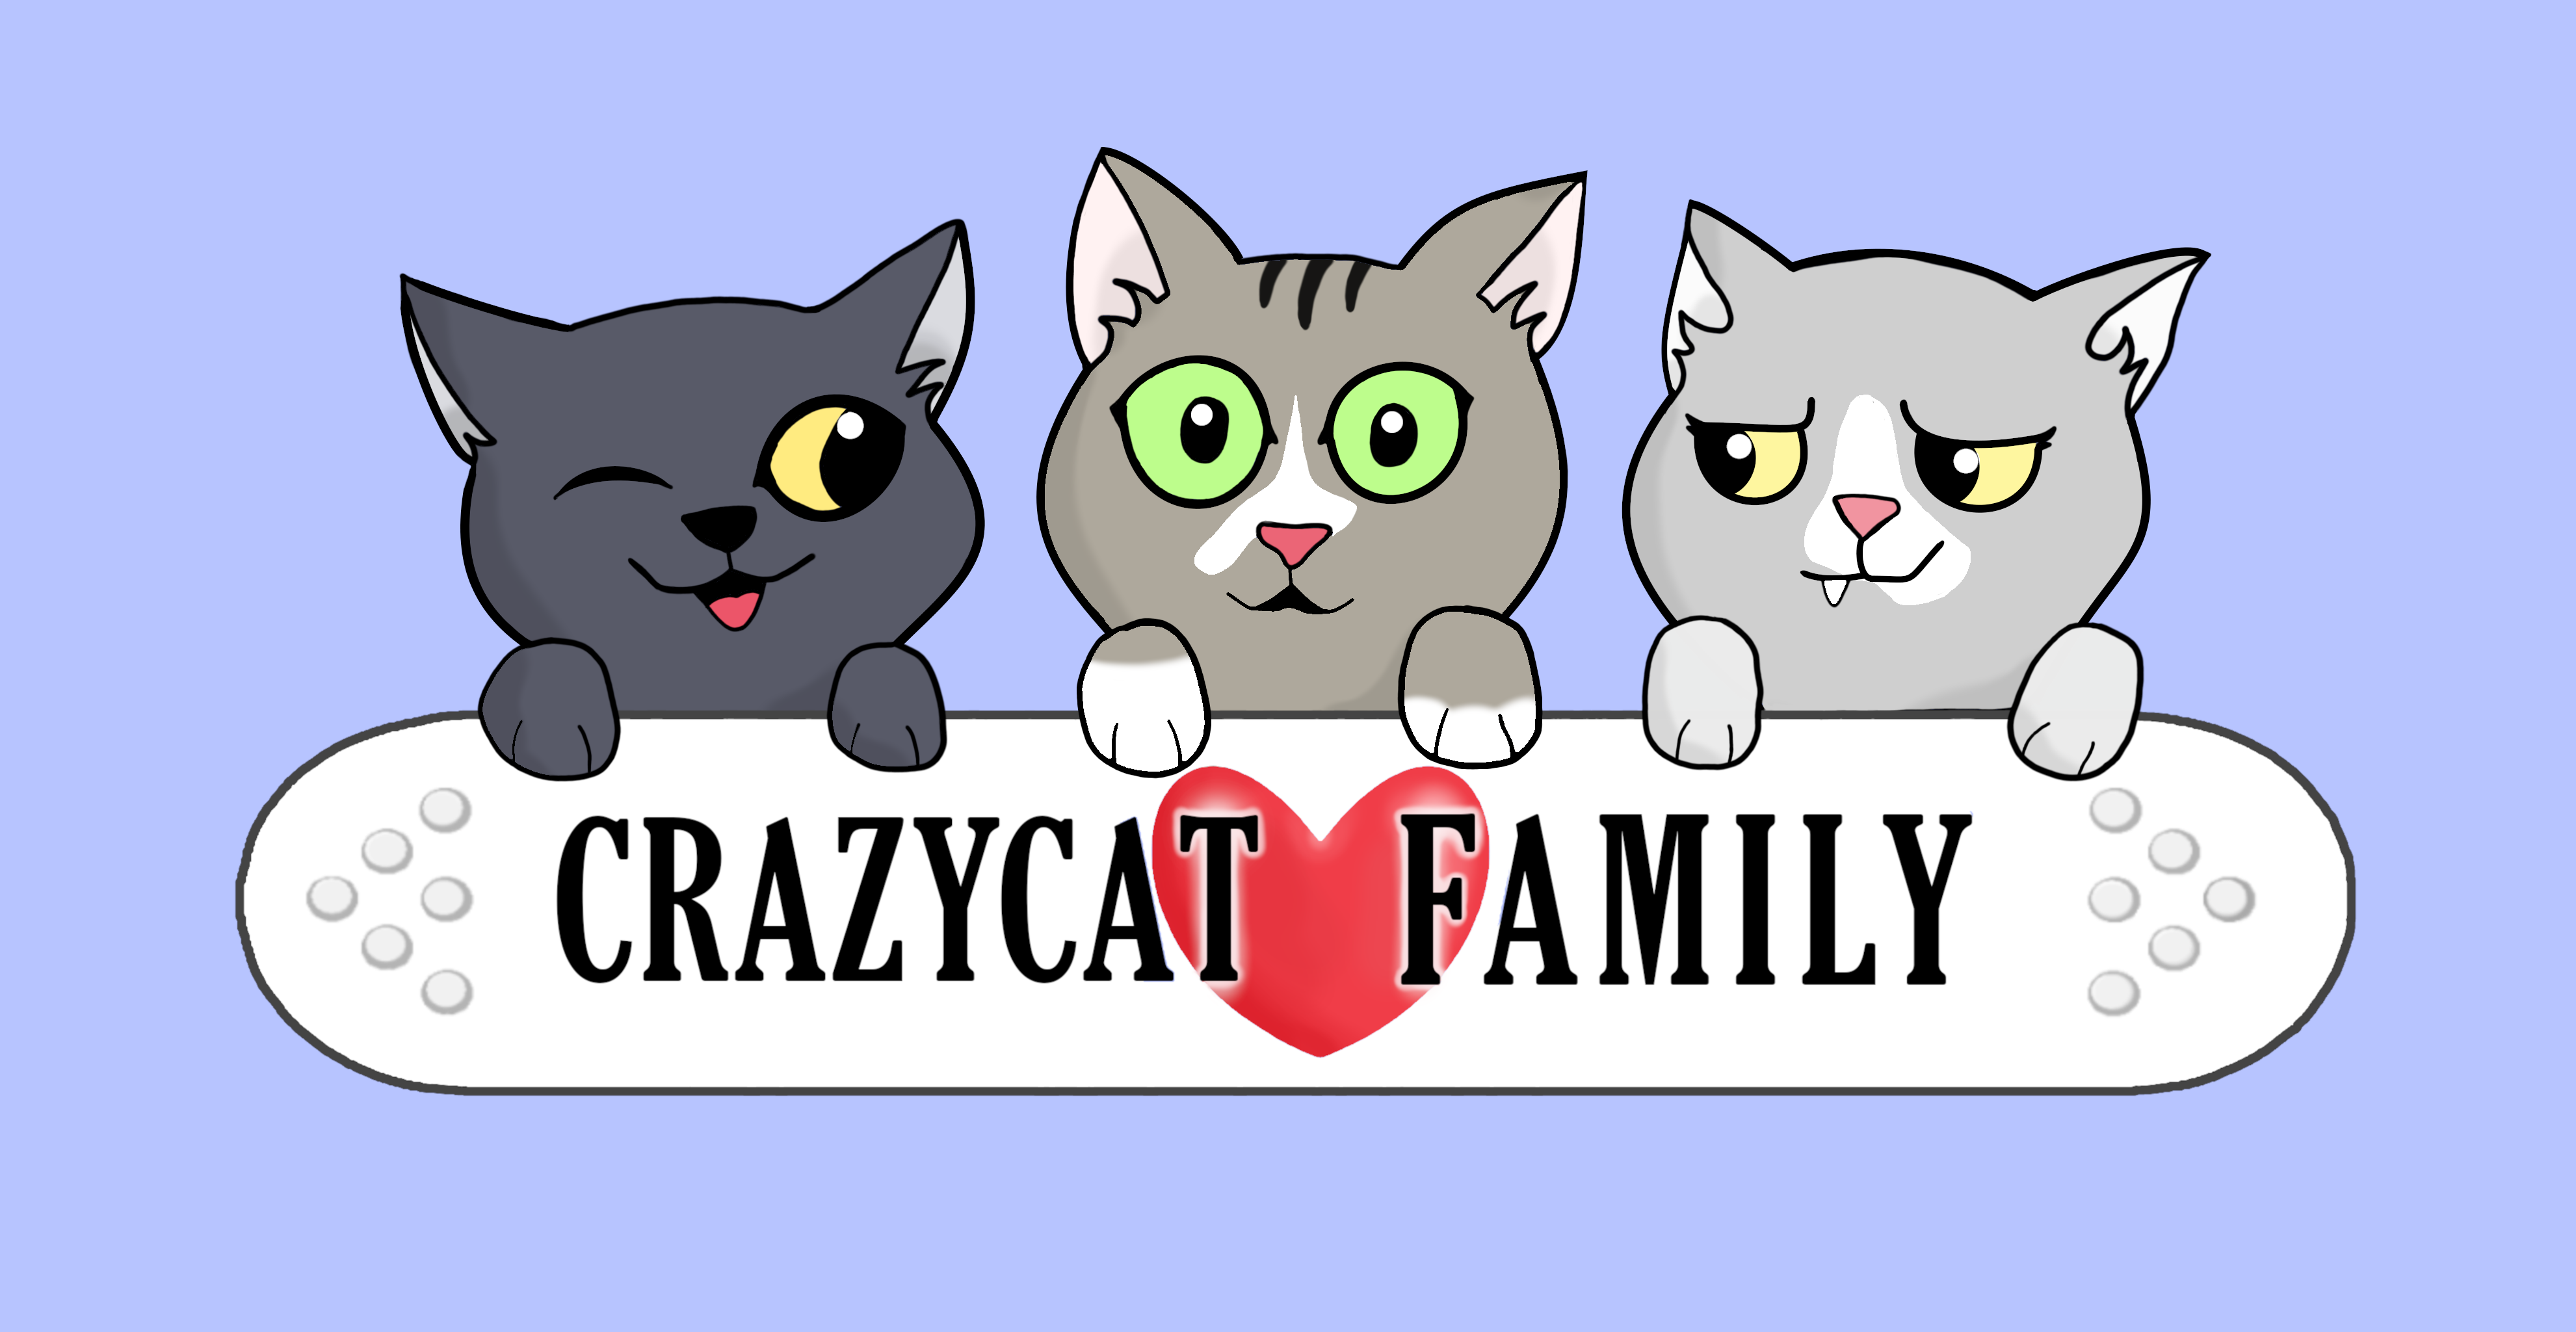 Cataire [Herbe aux chats] cultivée en France – Crazycat Family